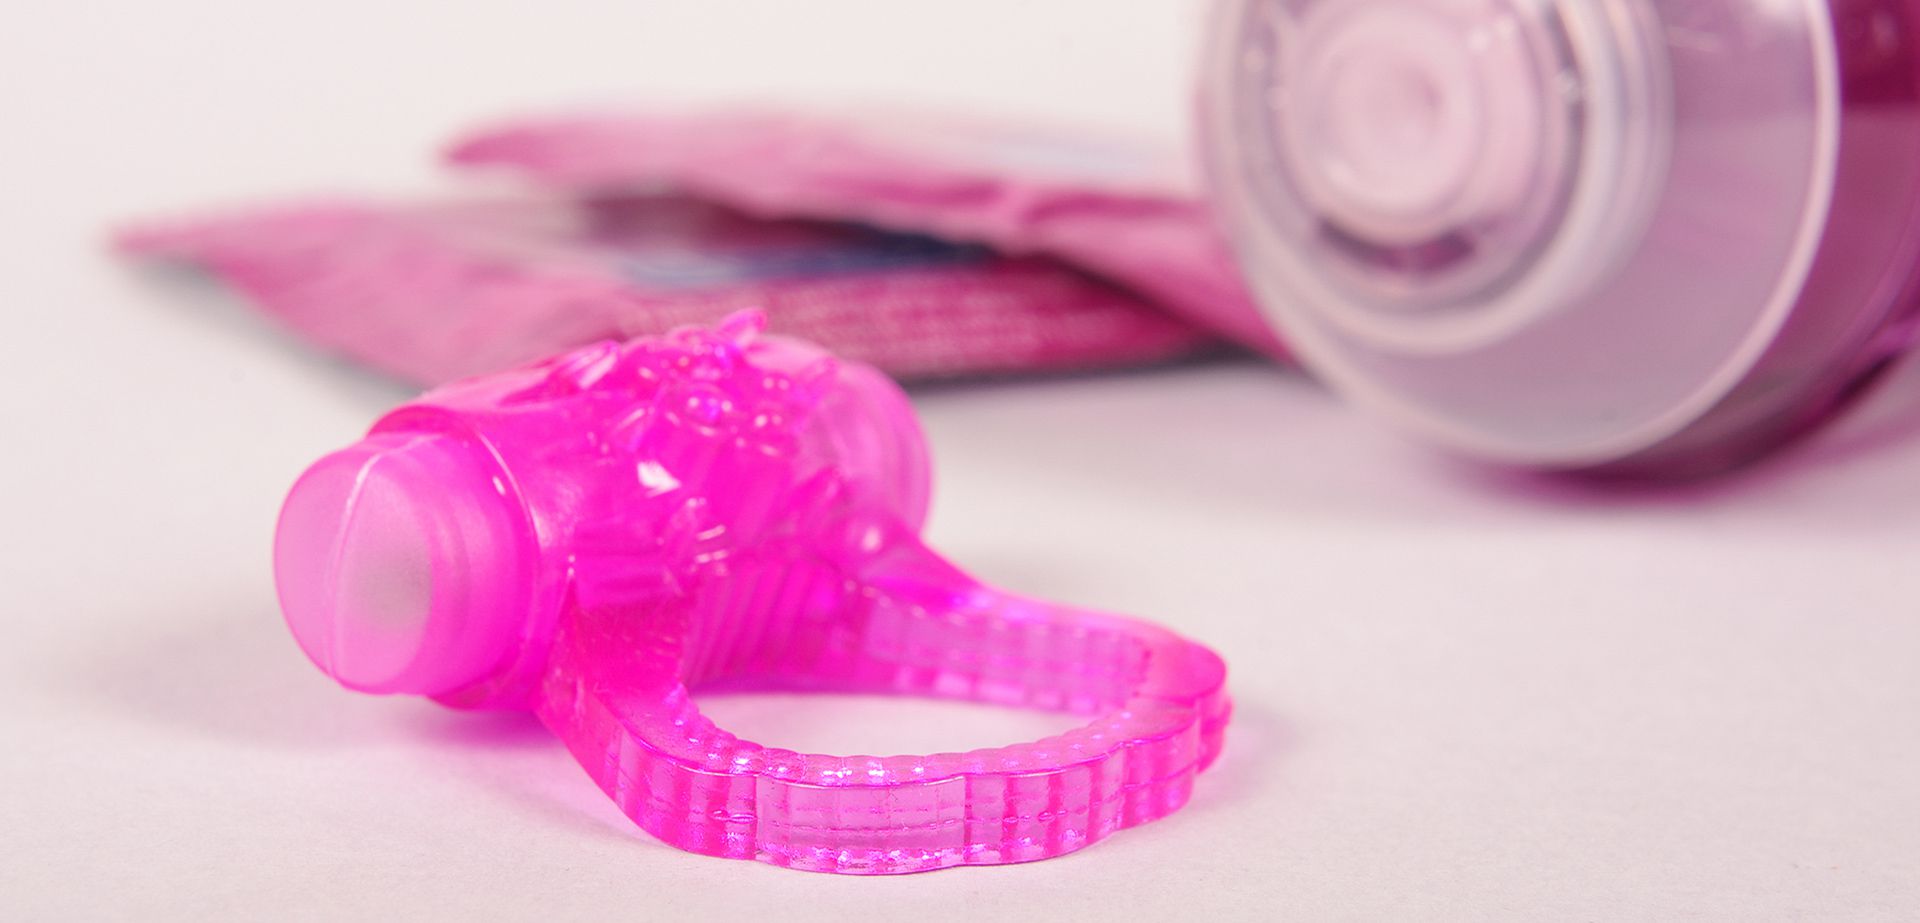 Pink vibrating cock ring.